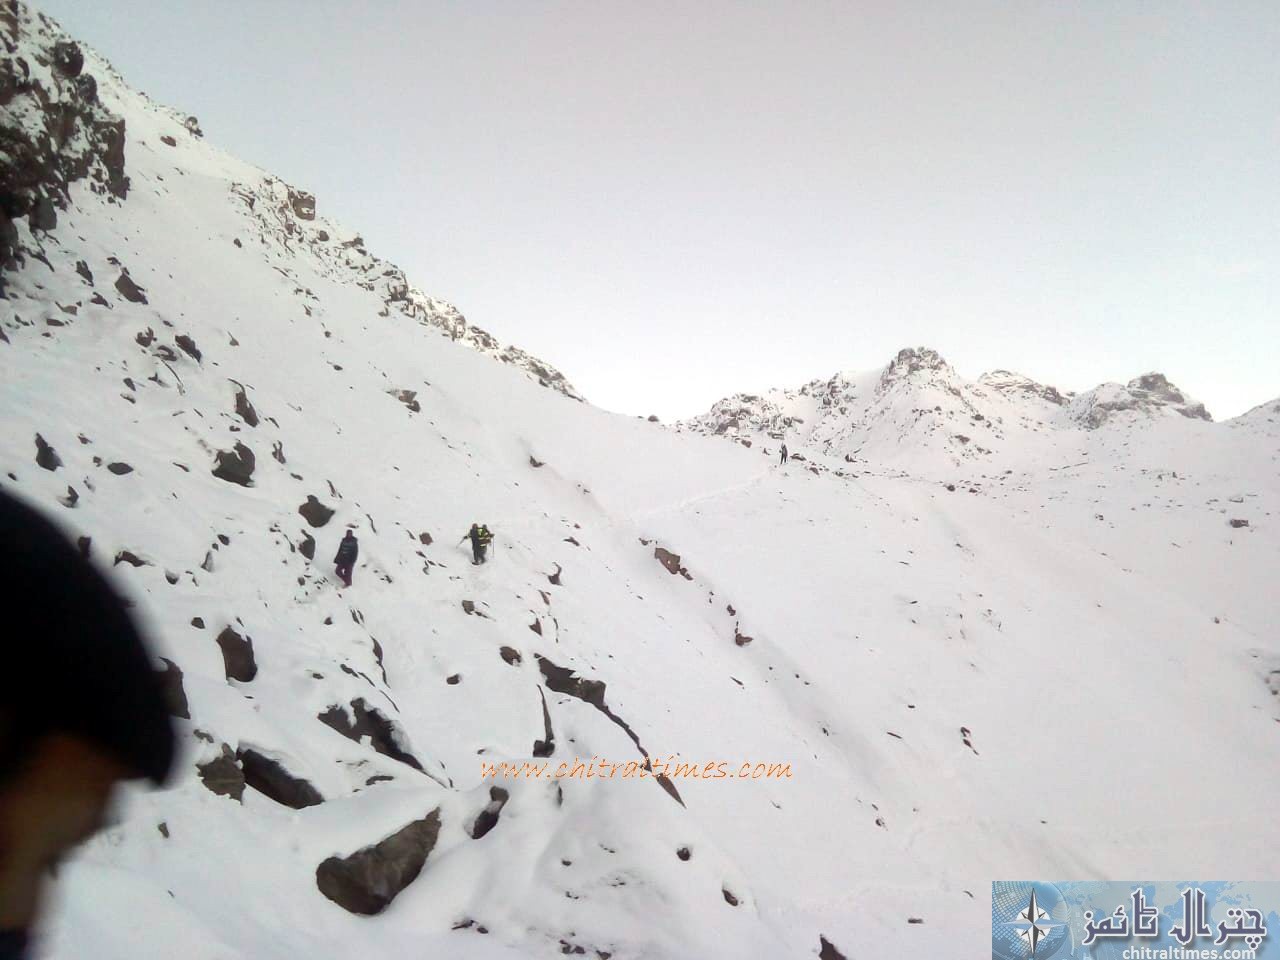 Shishikoh avalanche hit rescued chitral 21